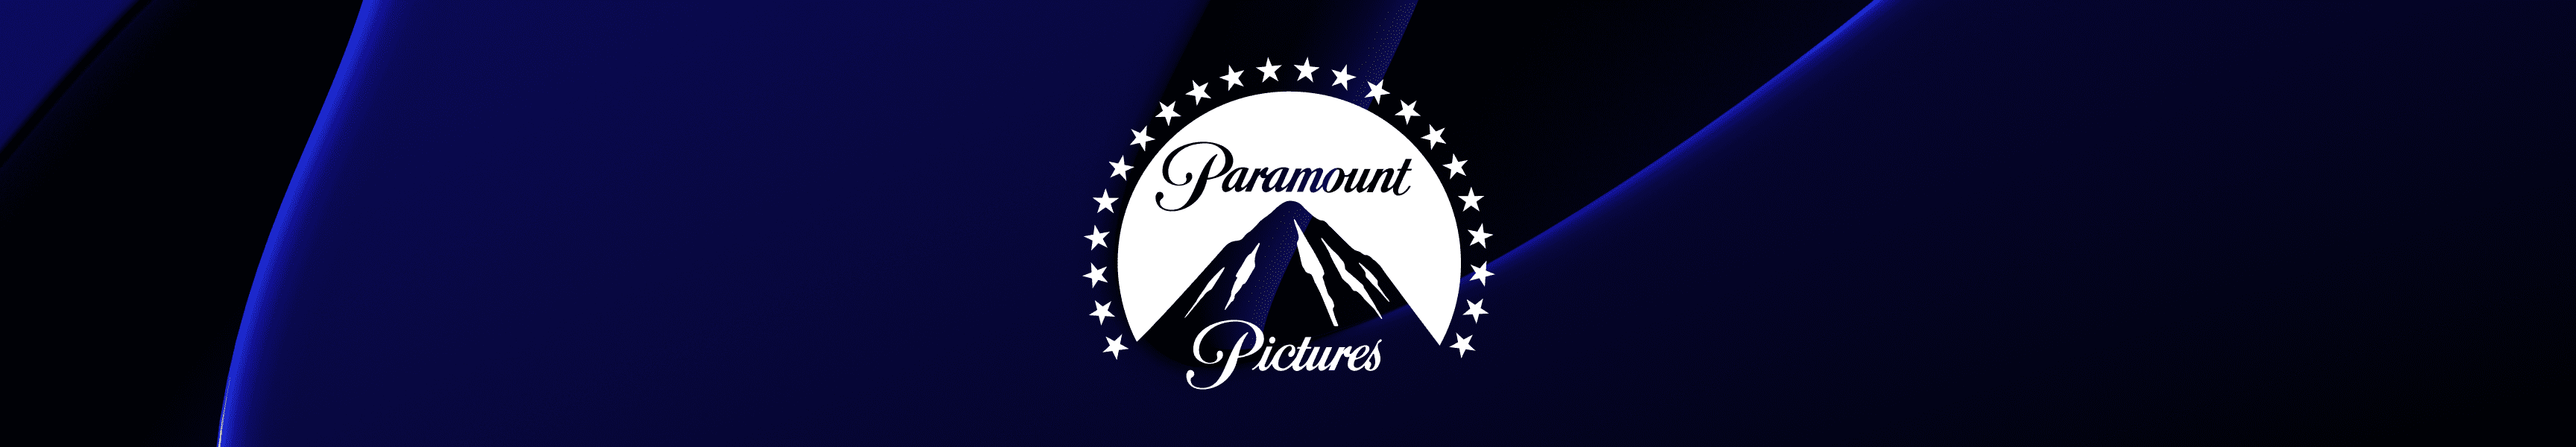 Paramount Pictures Journals